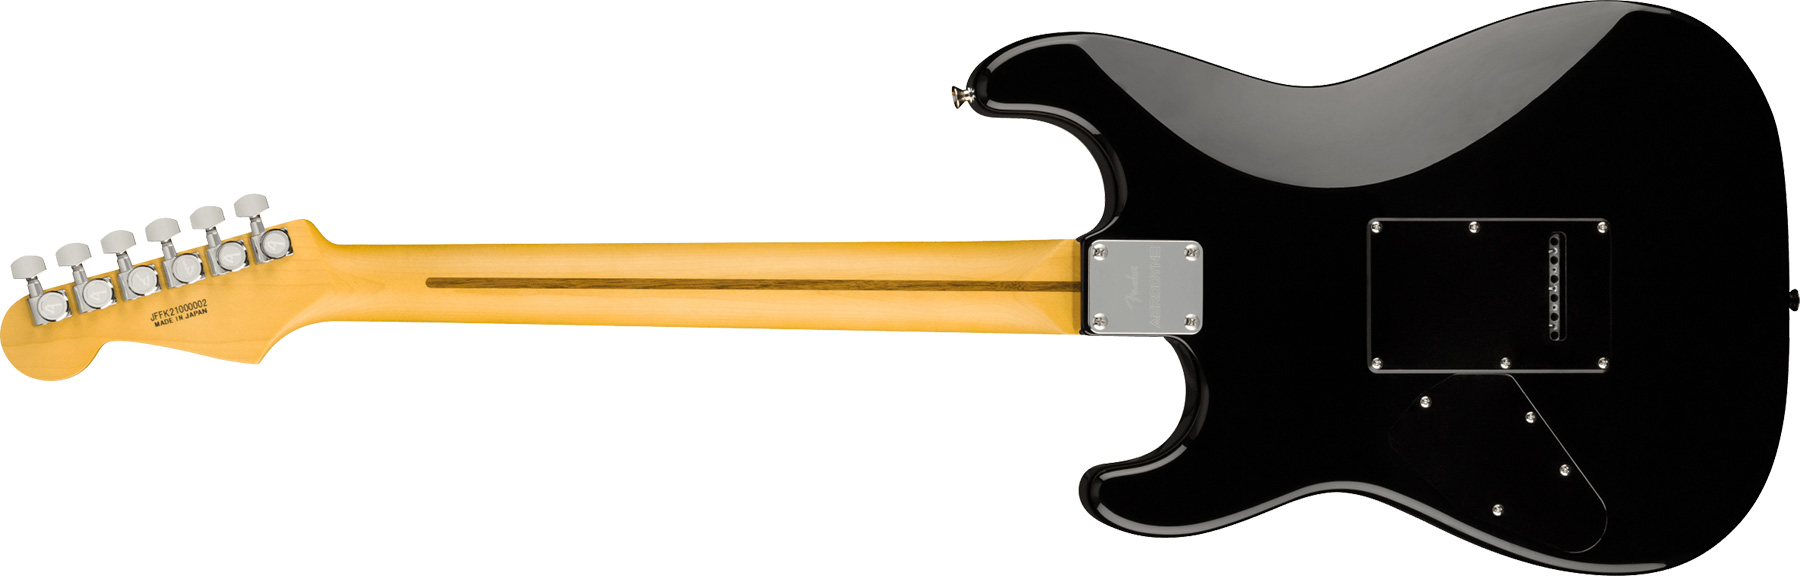 Fender Strat Aerodyne Special Jap Trem Hss Mn - Hot Rod Burst - Elektrische gitaar in Str-vorm - Variation 1